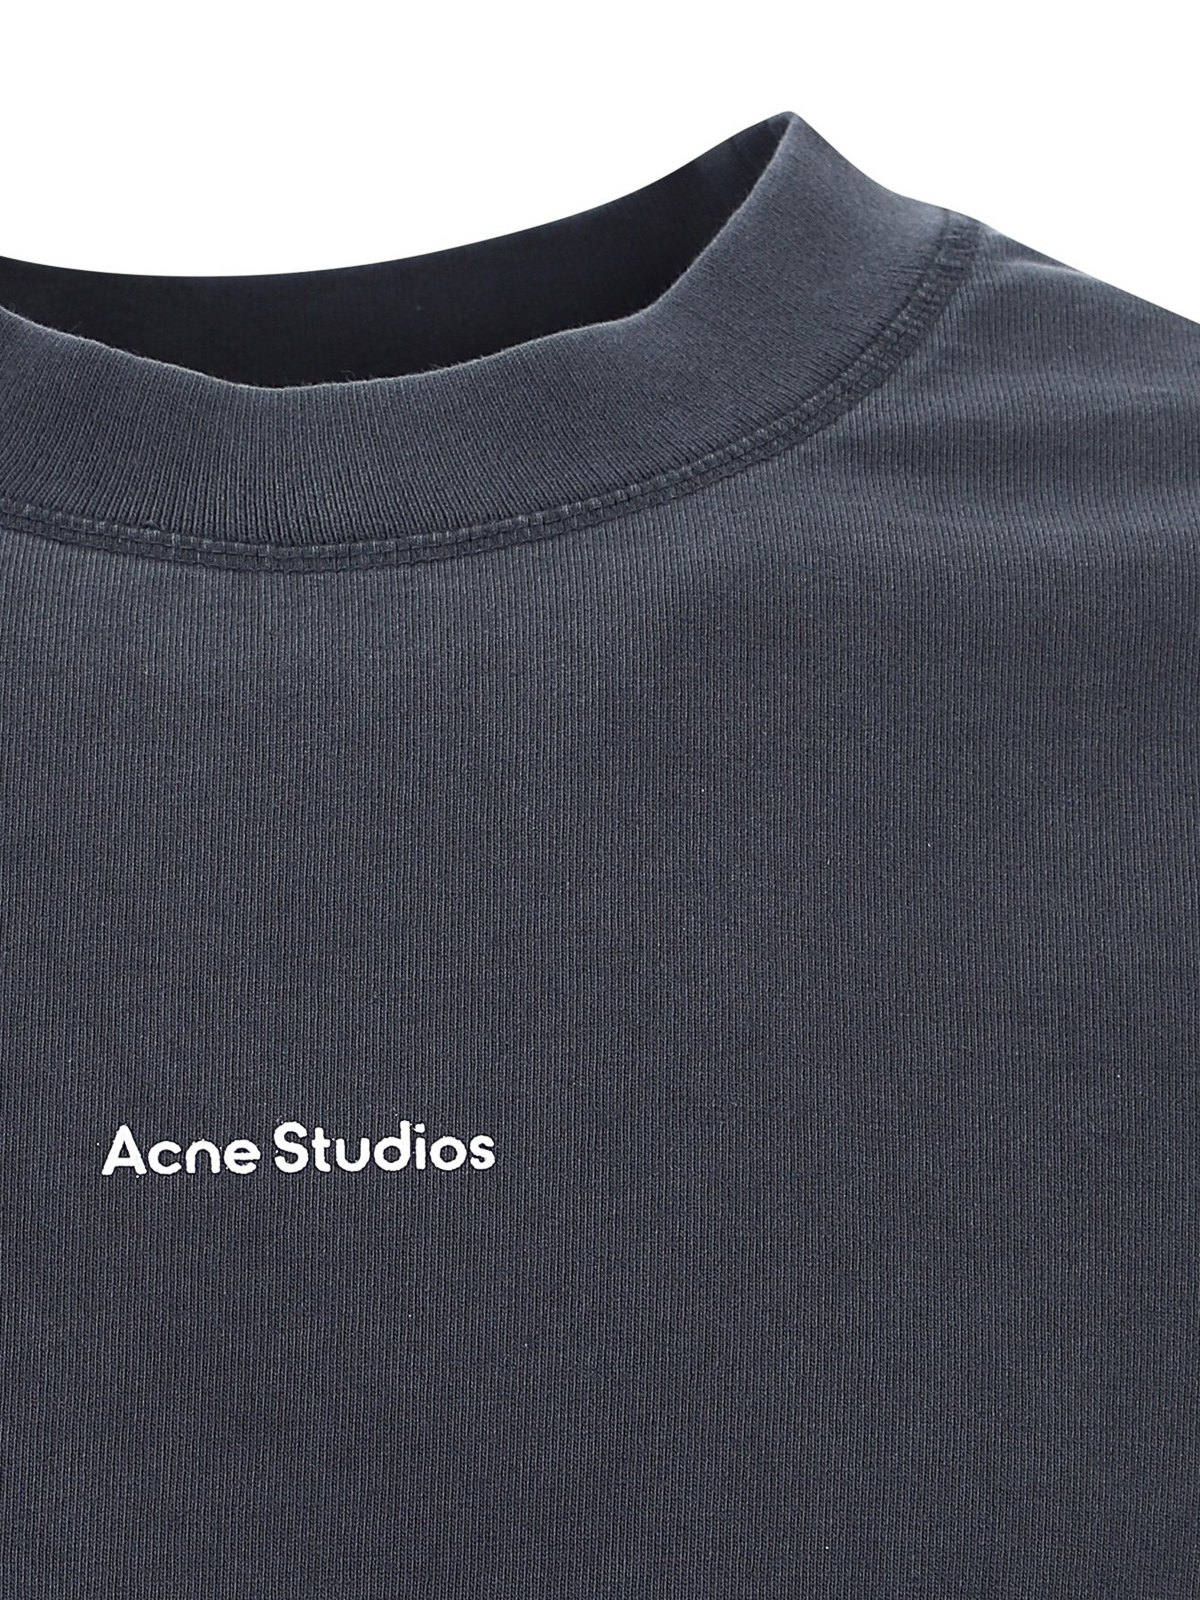 30％OFF】 Acne Studios ロゴTシャツ グレー neuromedrs.com.br